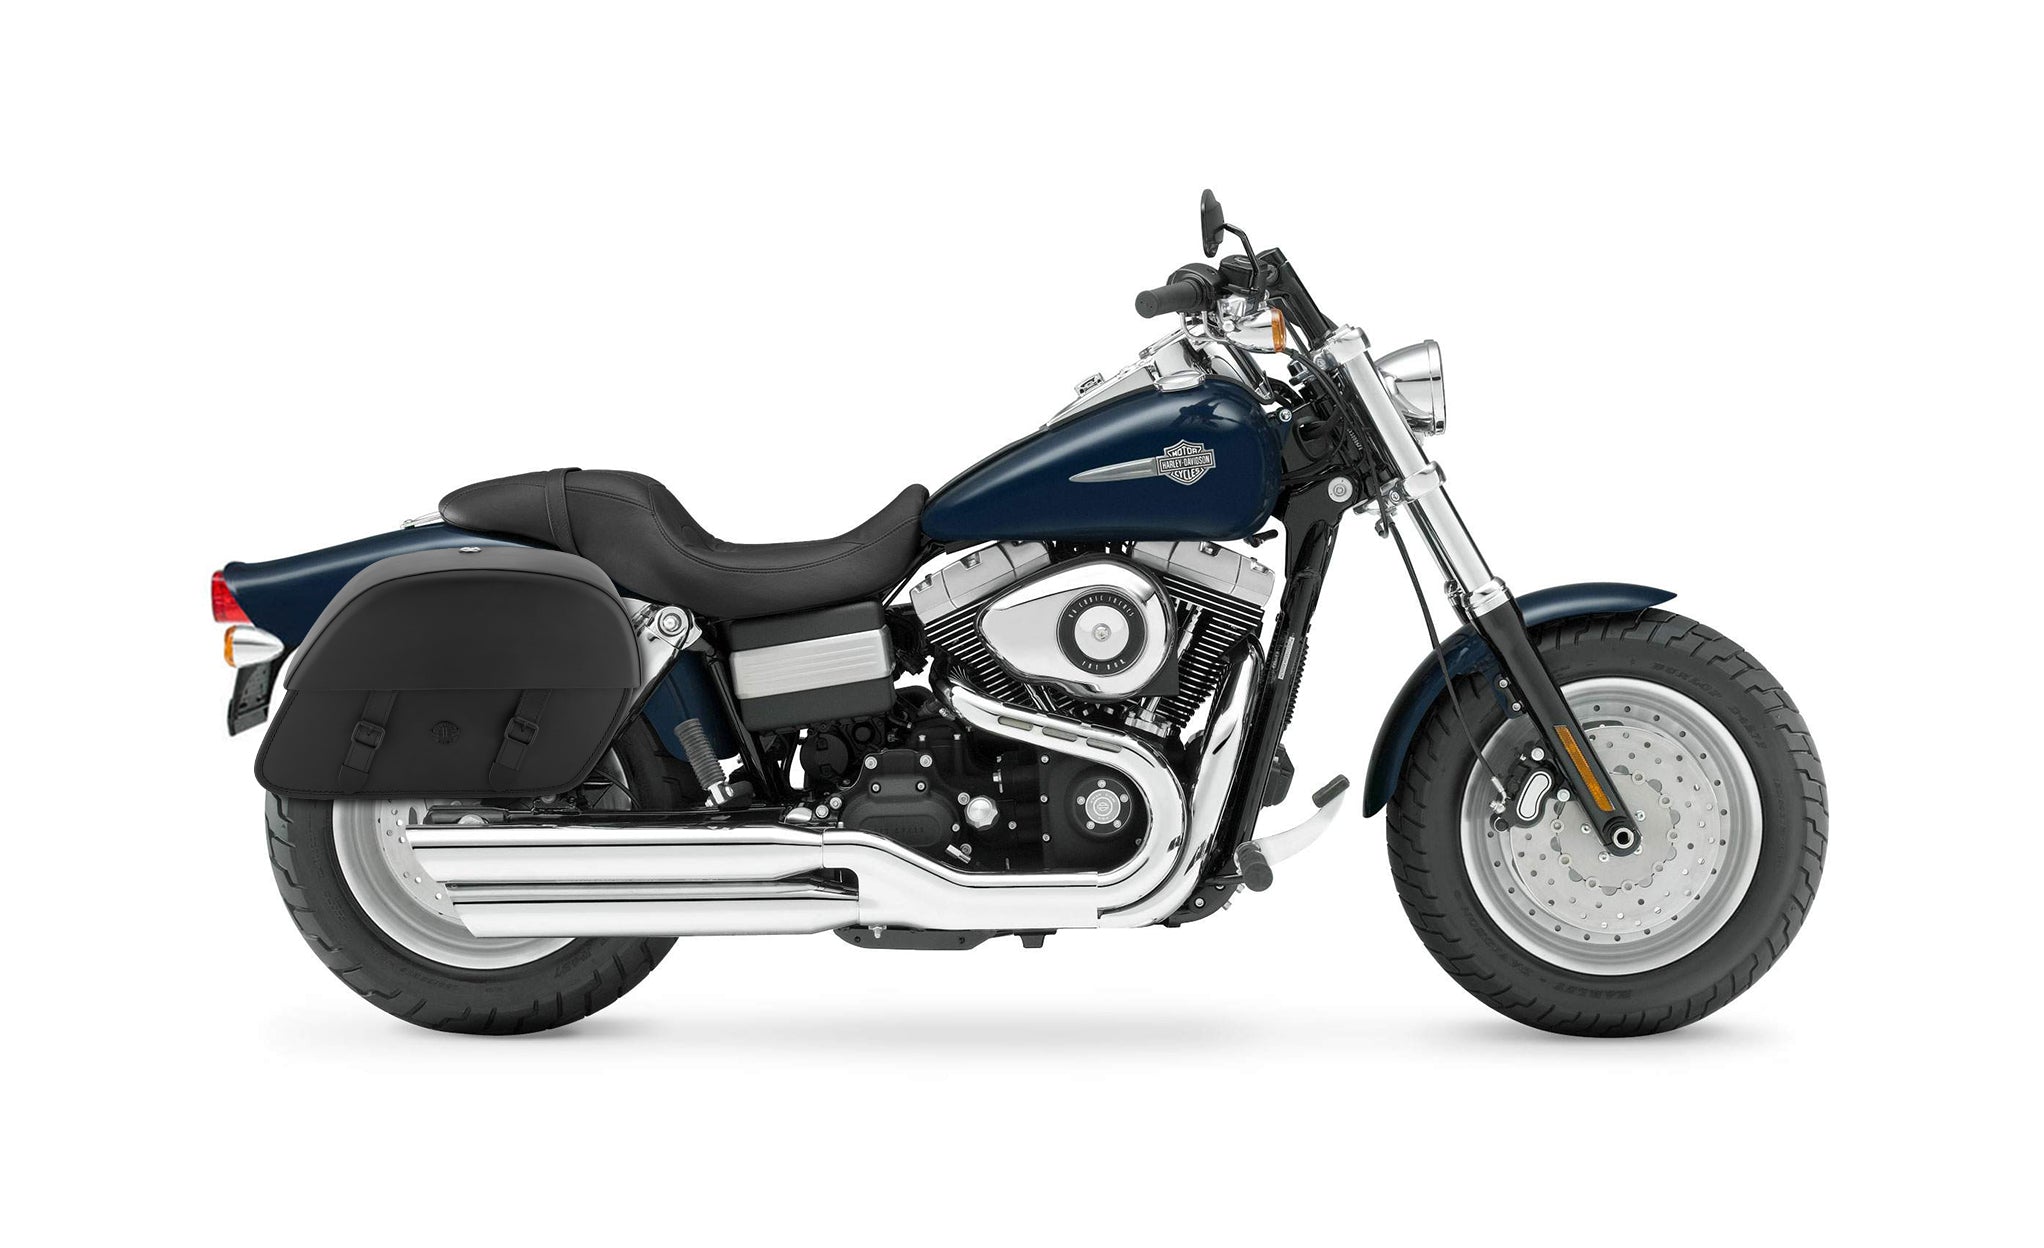 Viking Baelor Large Leather Motorcycle Saddlebags For Harley Dyna Fat Bob Fxdf Se on Bike Photo @expand